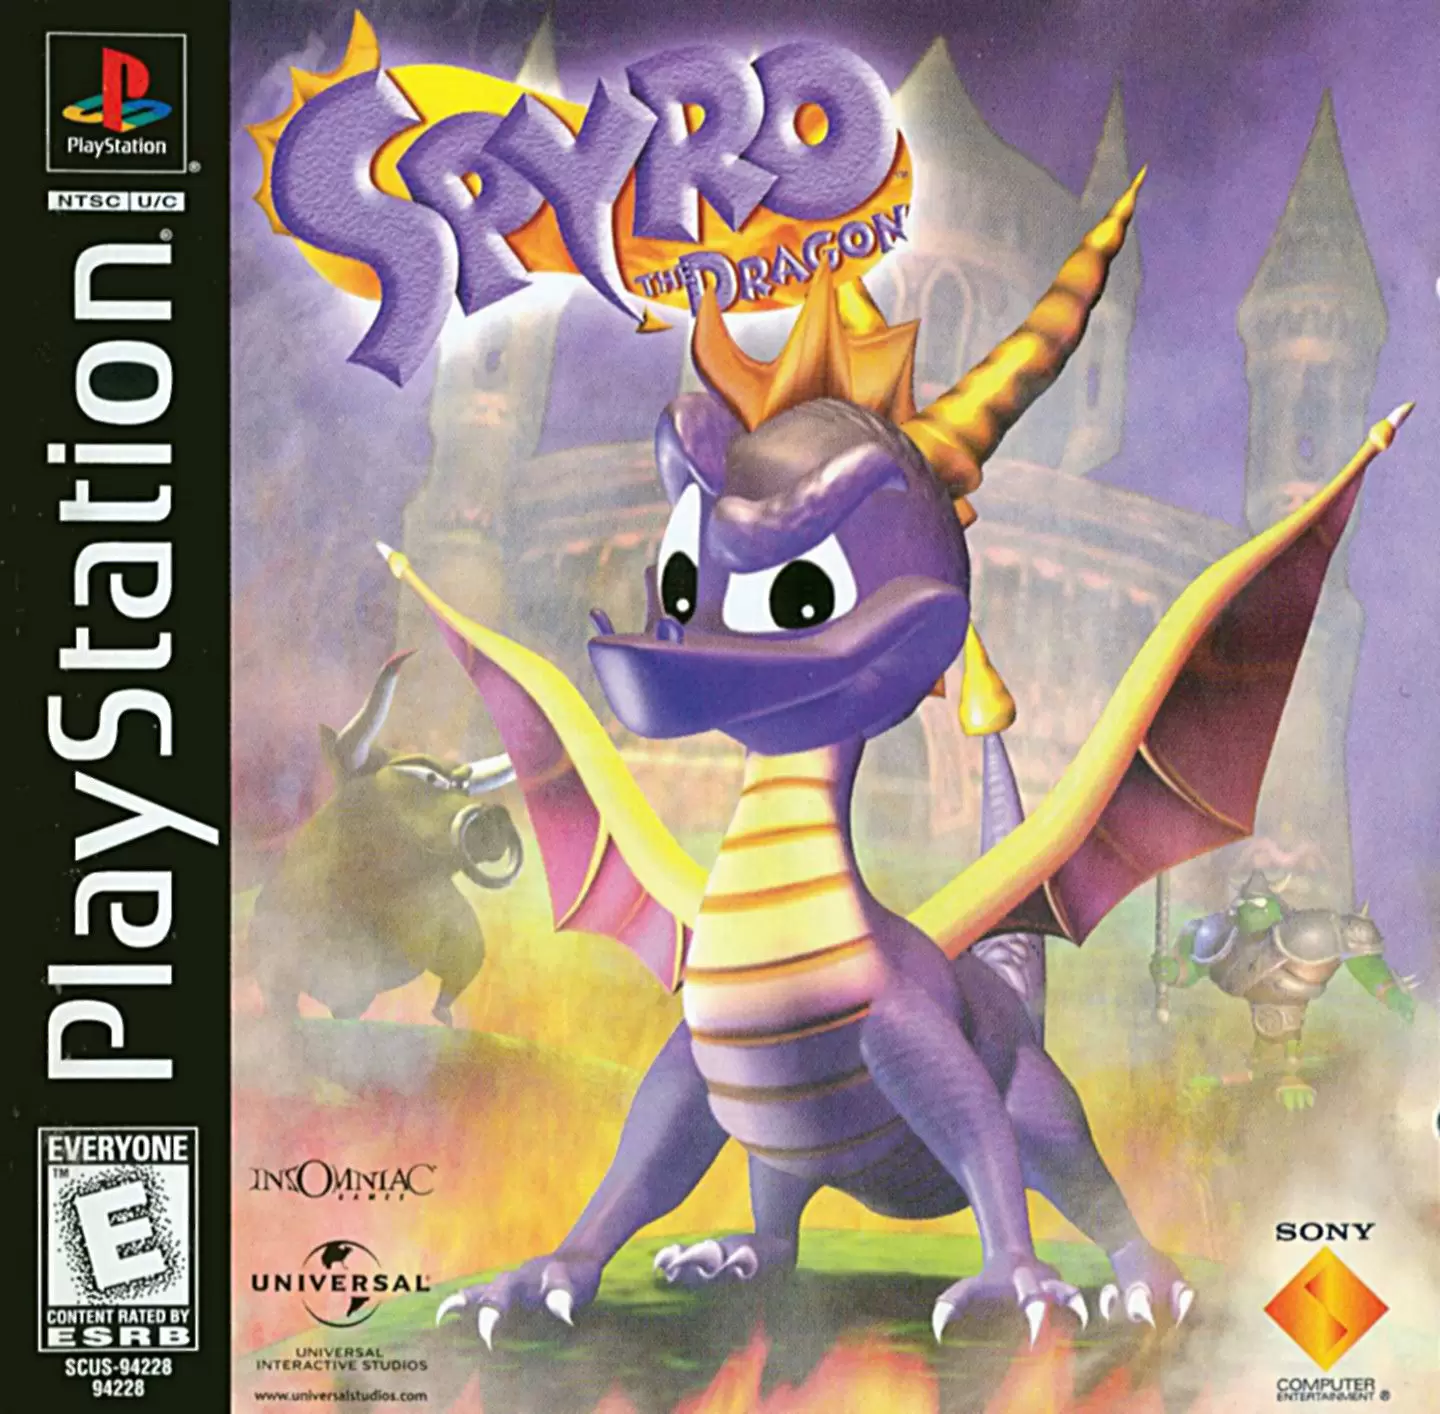 Jeux Playstation PS1 - Spyro the Dragon